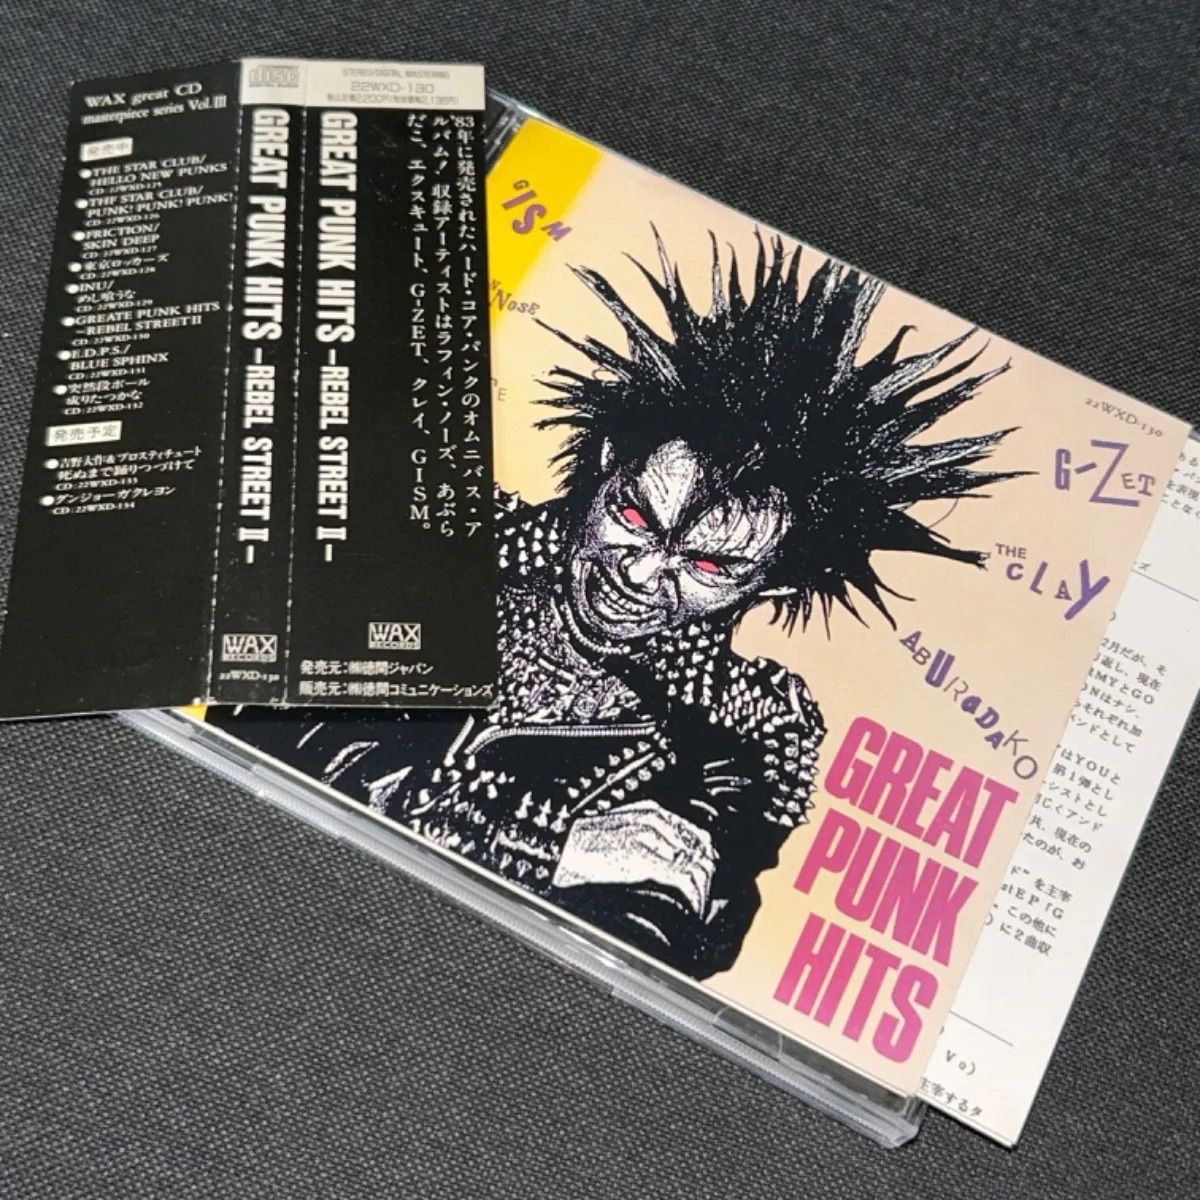 S3504) GREAT PUNK HITS REBEL STREET Ⅱ CD great punk hits rebel street 2 ギズム  あぶらだこ ラフィンノーズ エクスキュート ジーゼット GIZM LAUGHIN NOSE G-ZET - メルカリ